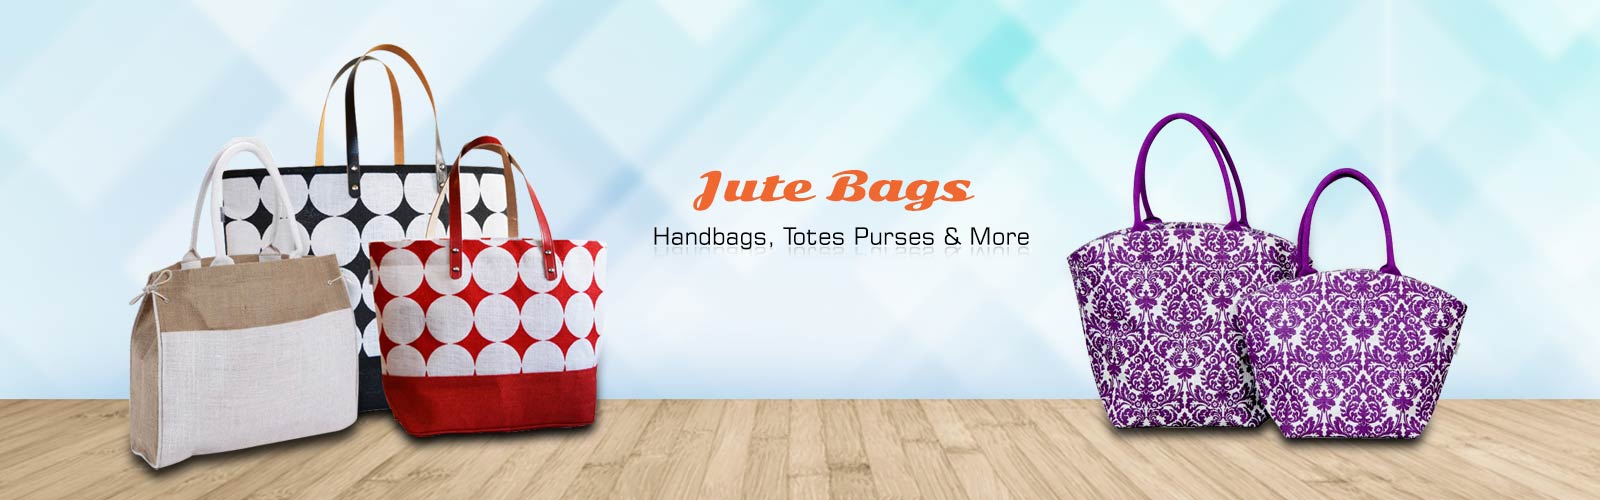 Wholesale Jute Bag Supplier in Ireland